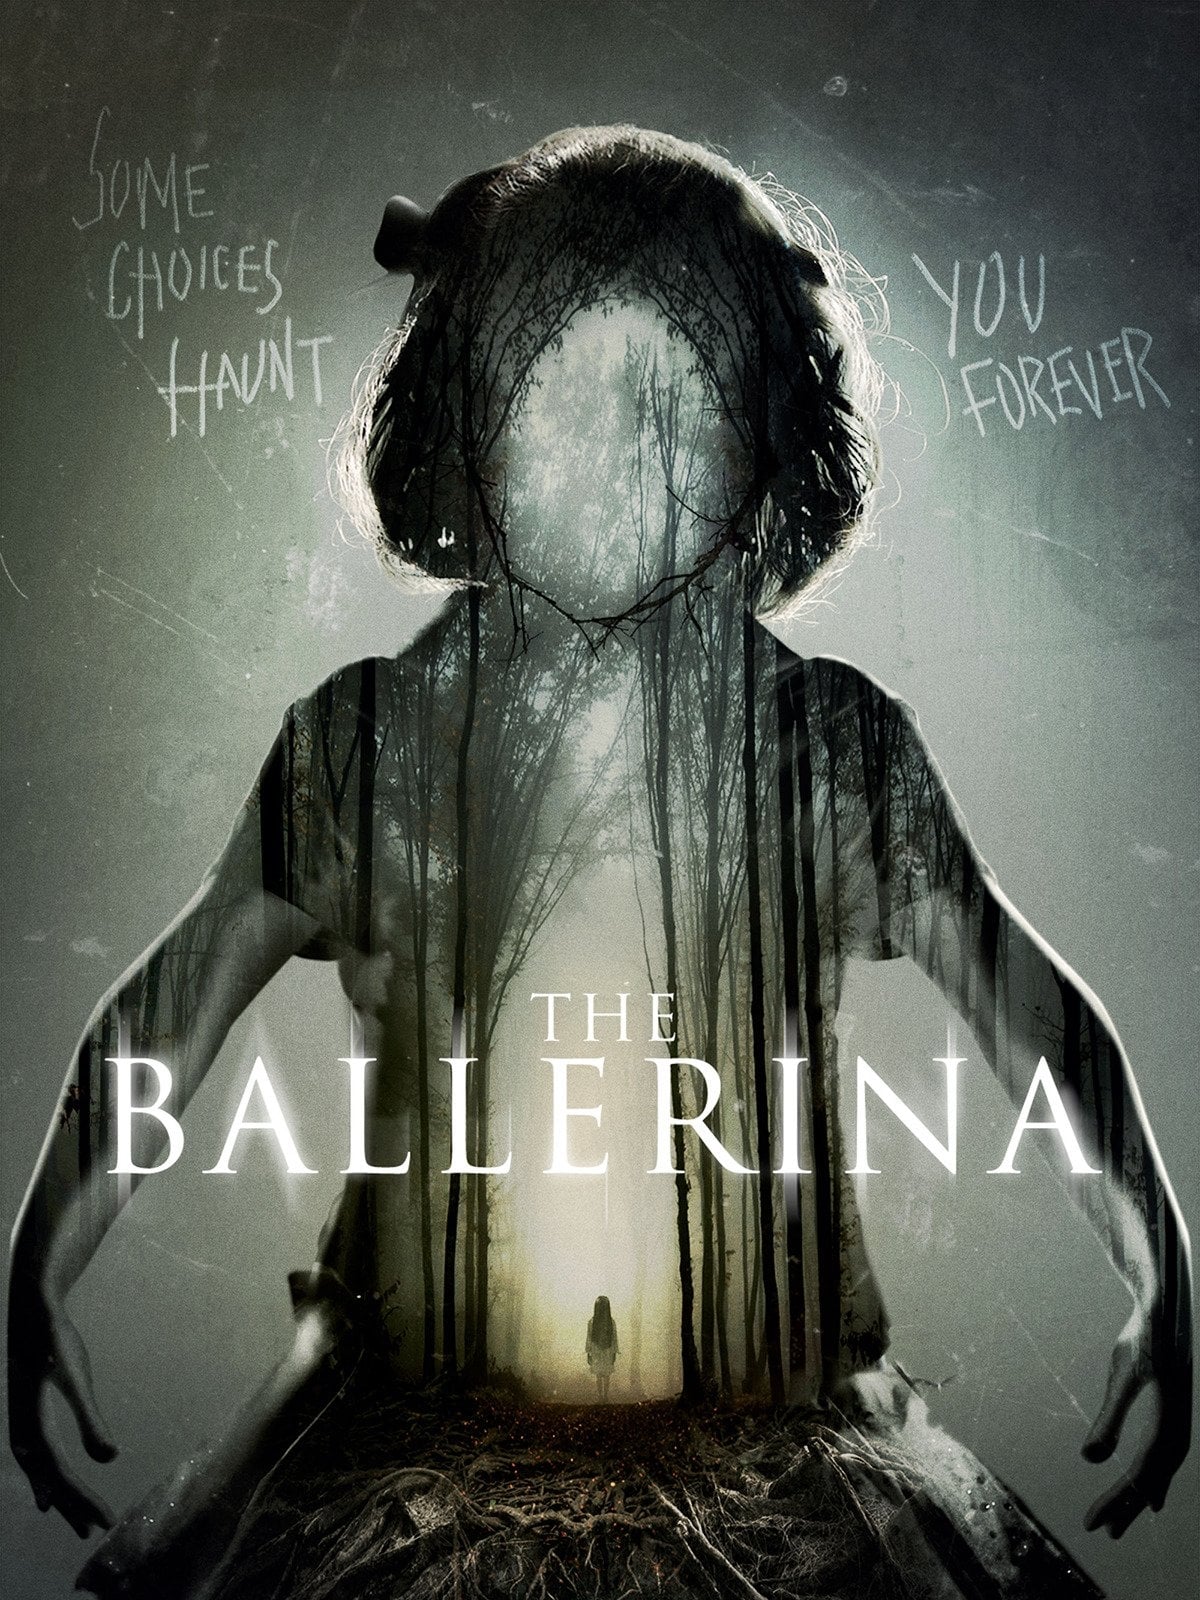 The Ballerina (2017) Movie. Where To Watch Online